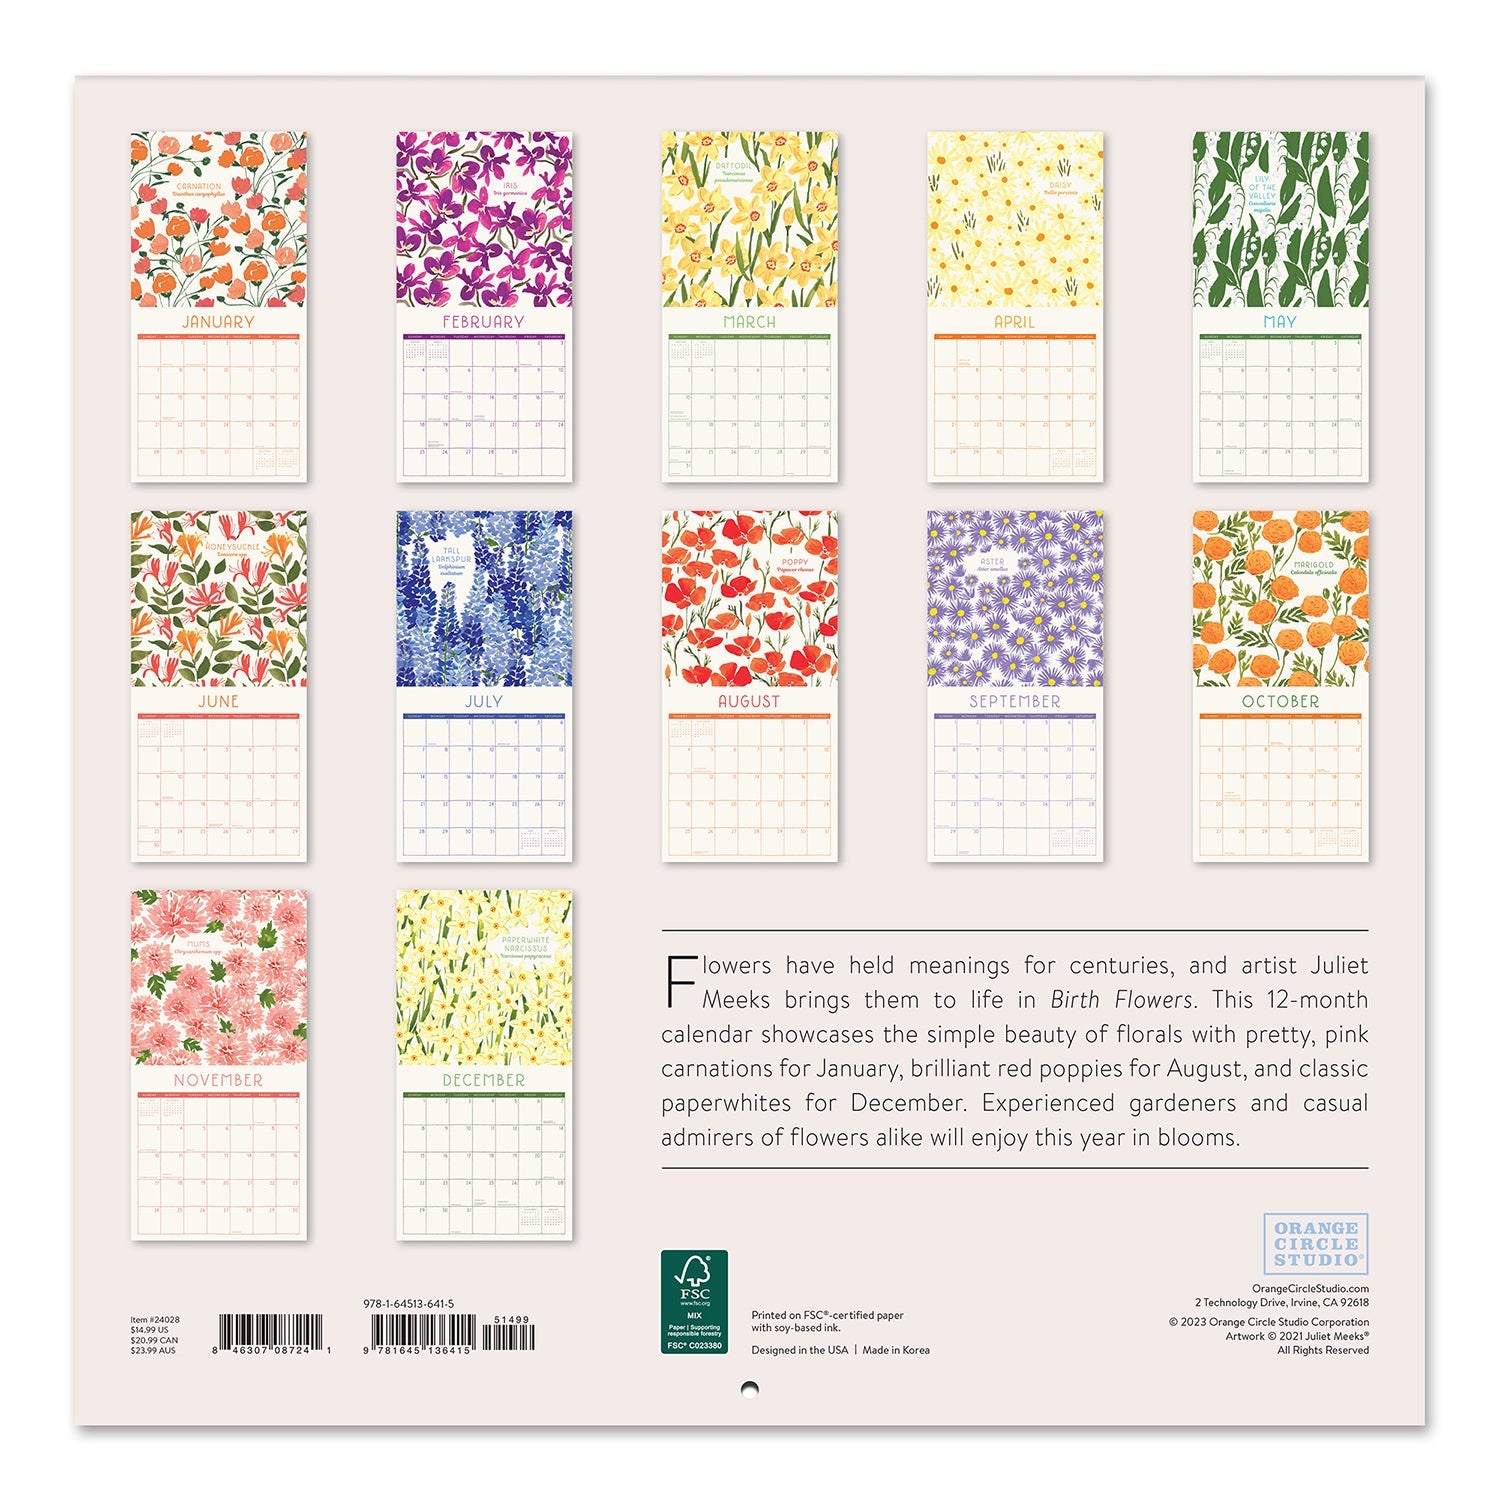 2024 Birth Flowers - Square Wall Calendar